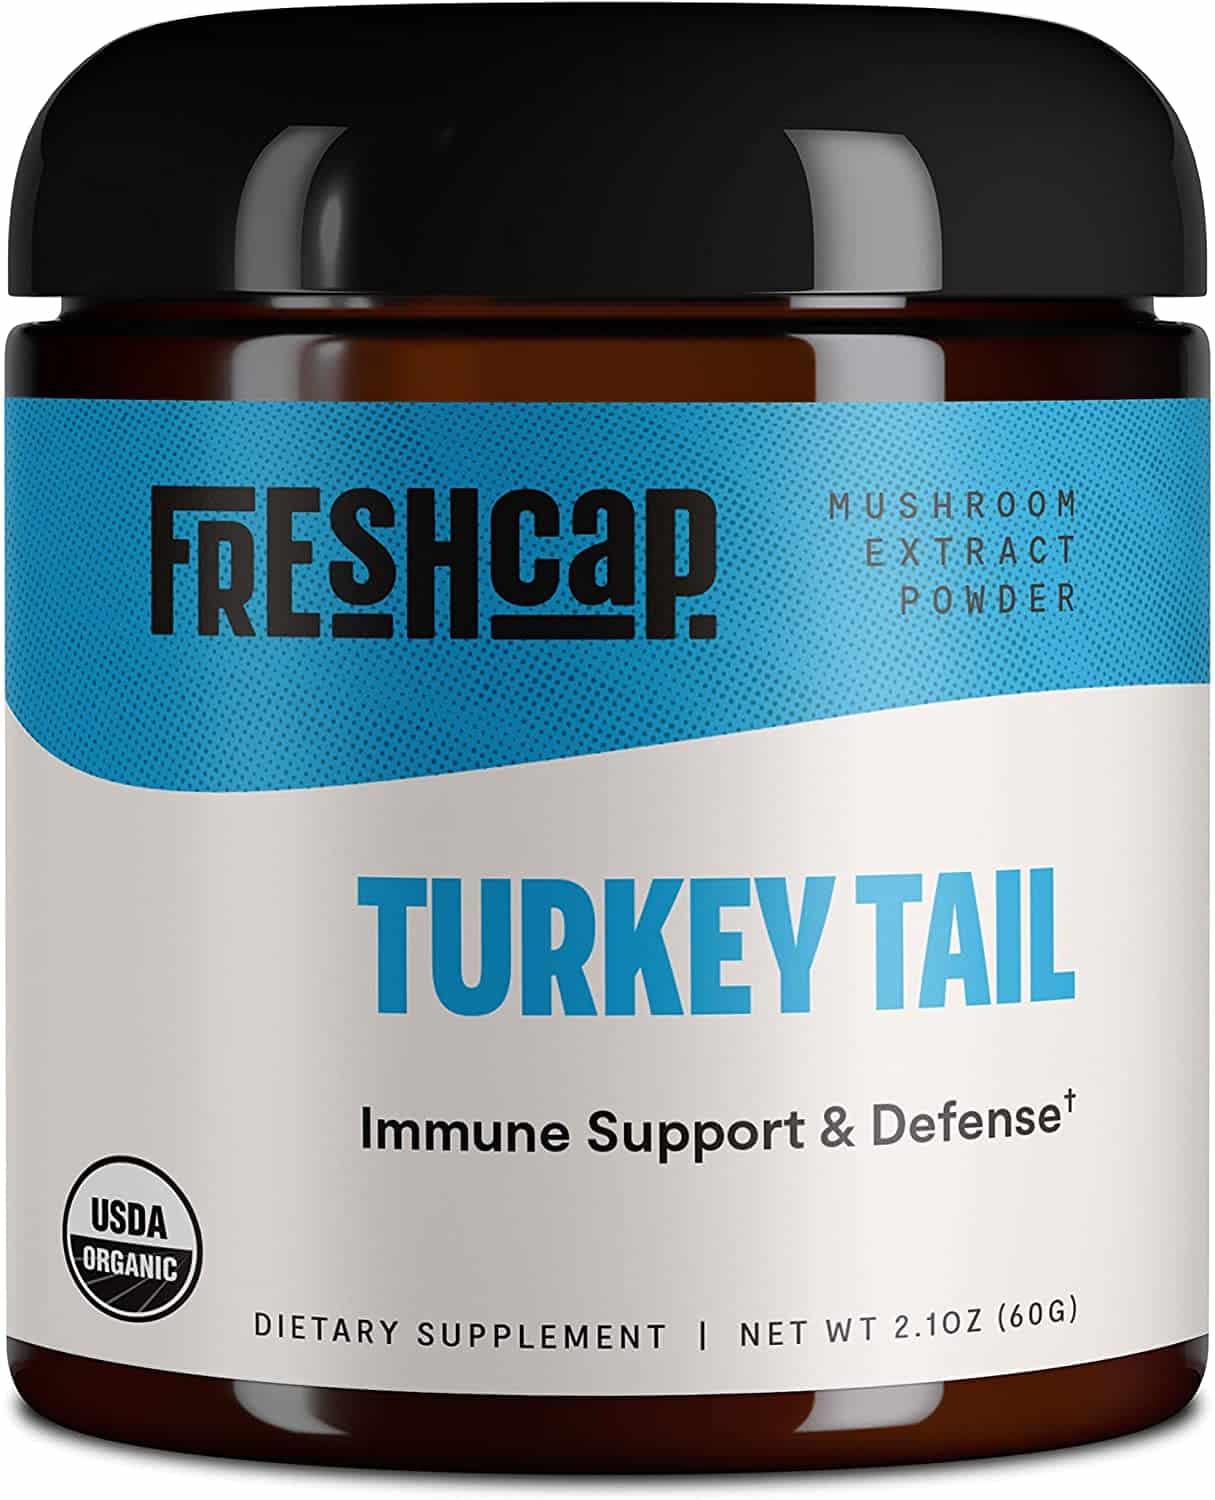 freshcap turkey tail powder